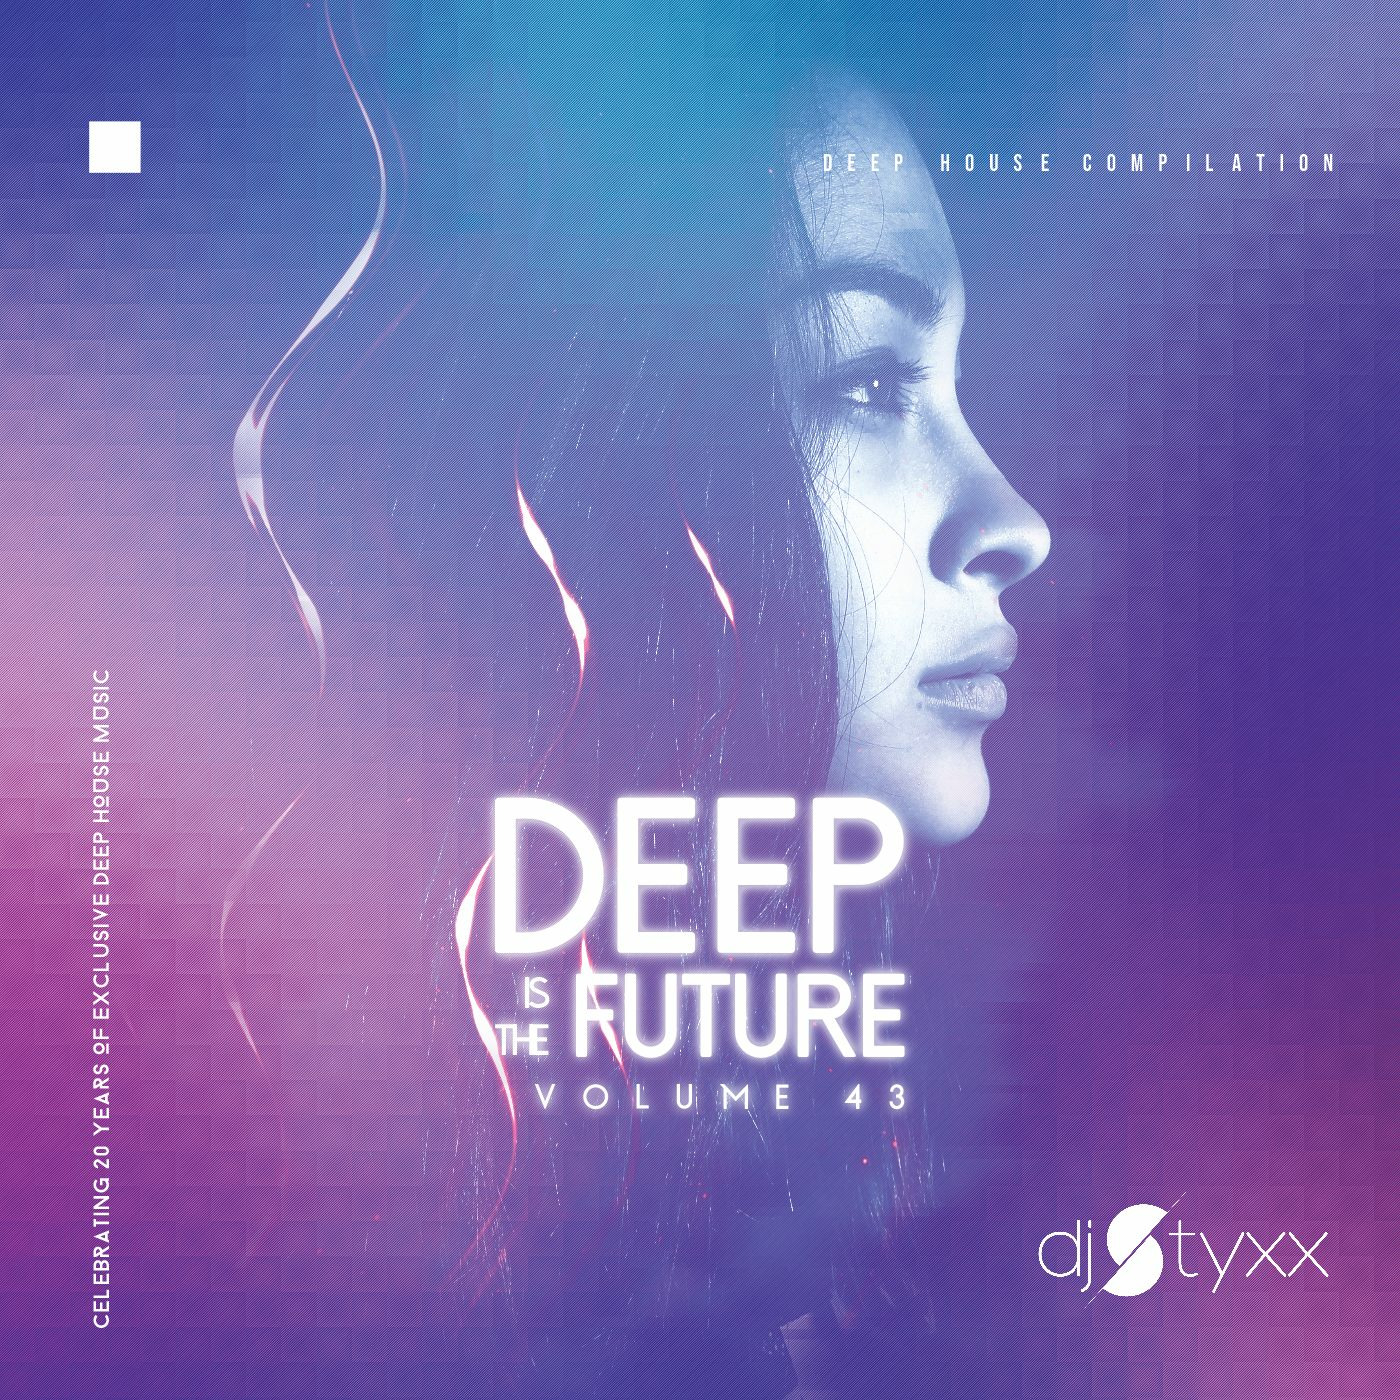 Styxx - Deep is the Future (Vol.43)